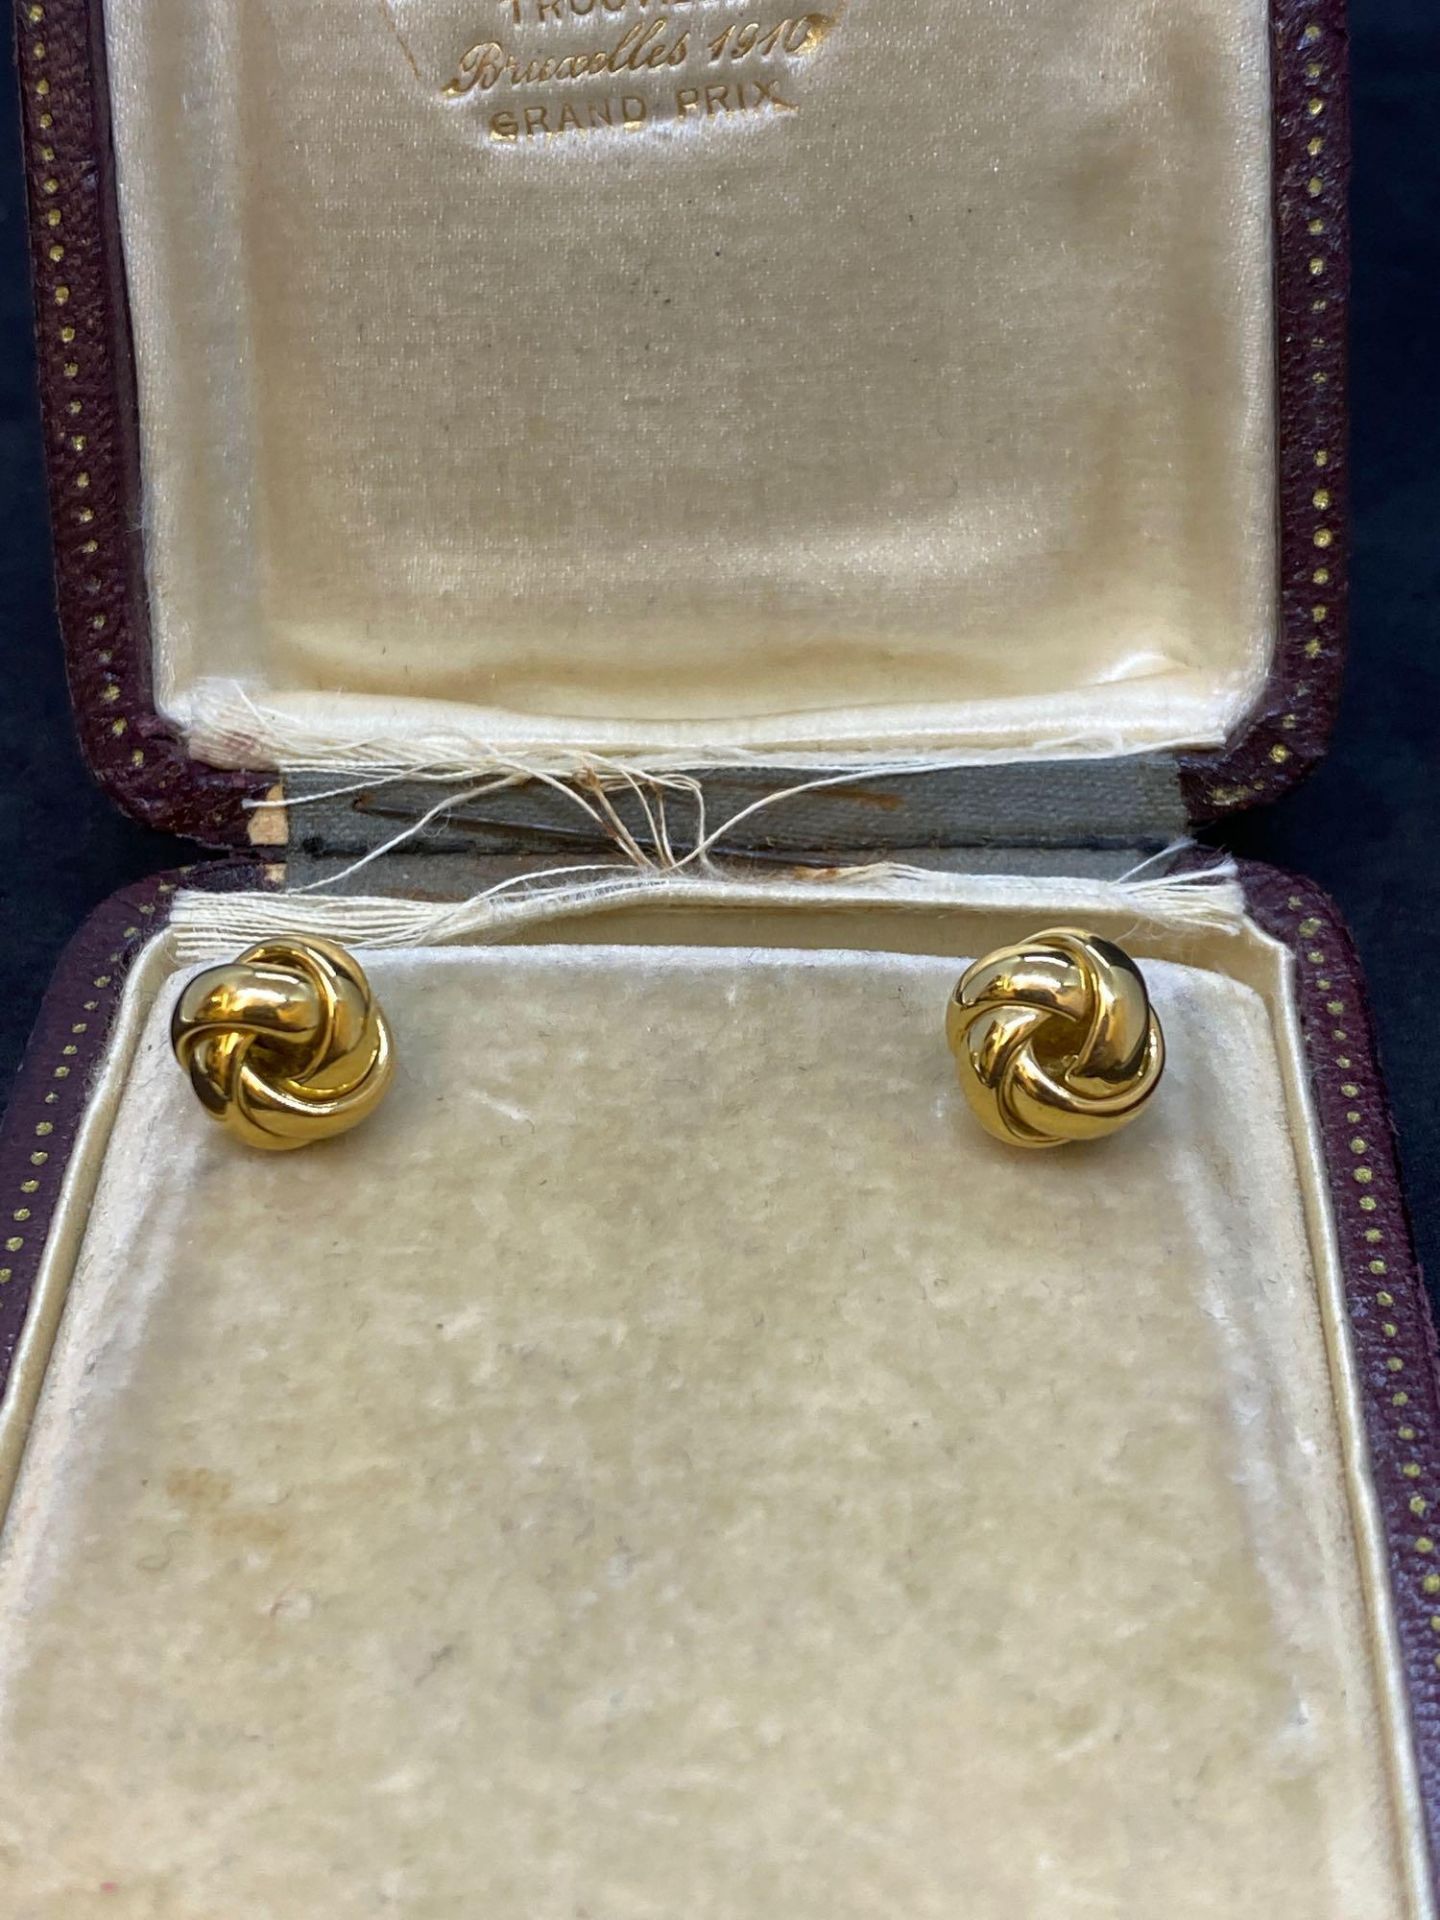 18ct Gold Knott Stud Earrings - 7 Grams